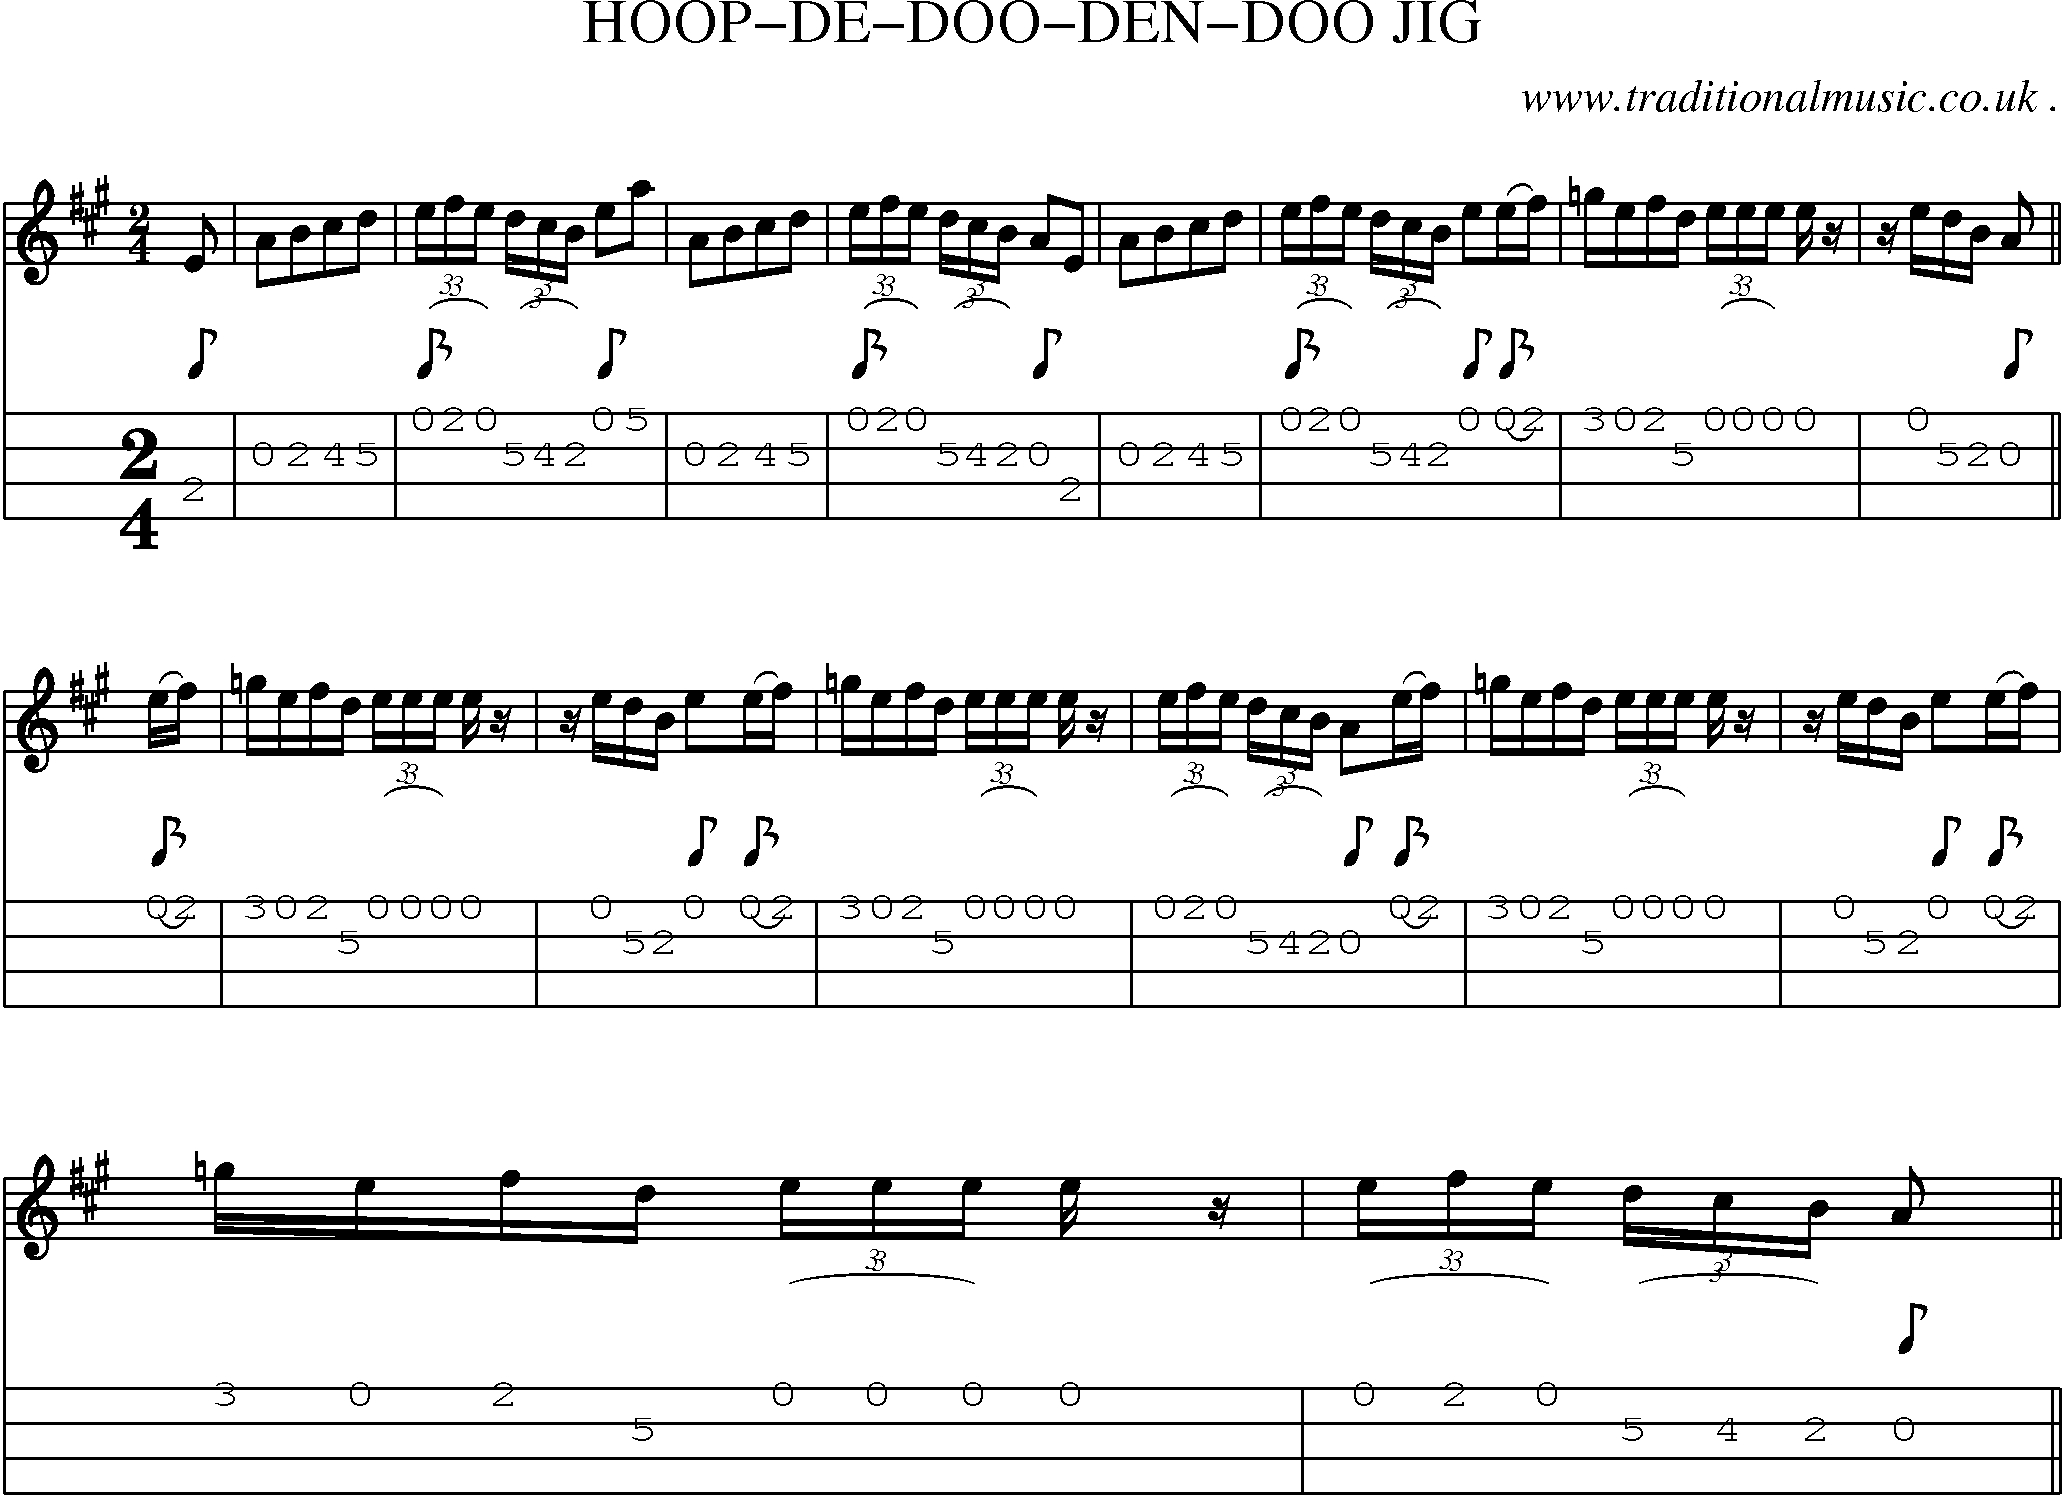 Sheet-Music and Mandolin Tabs for Hoop-de-doo-den-doo Jig